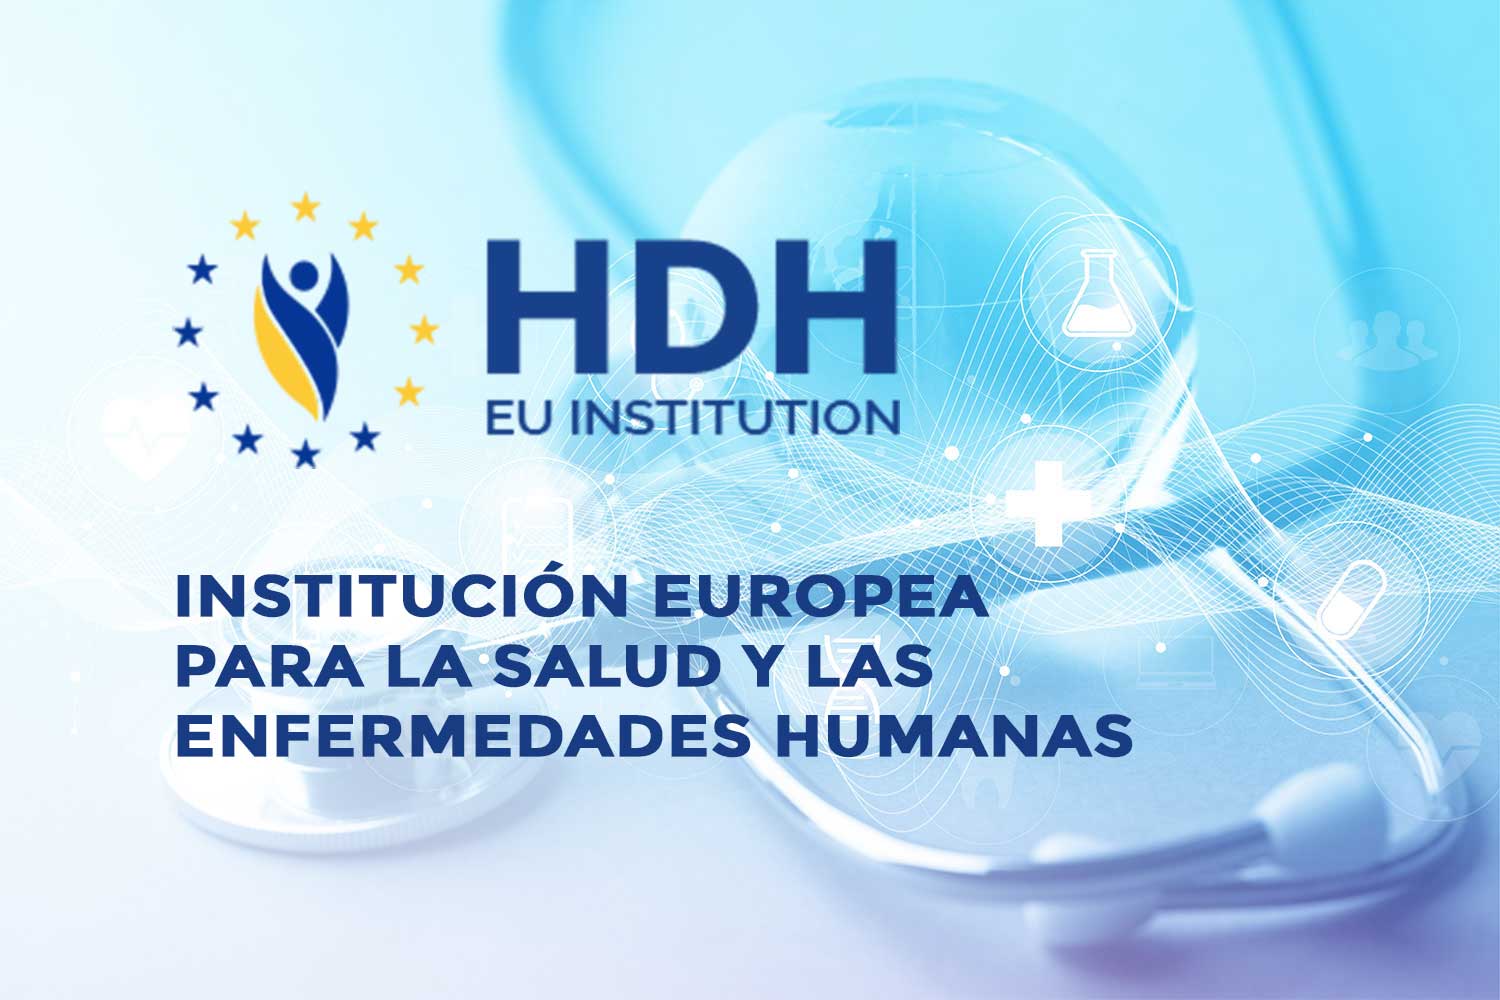 Conoce HDH Institution